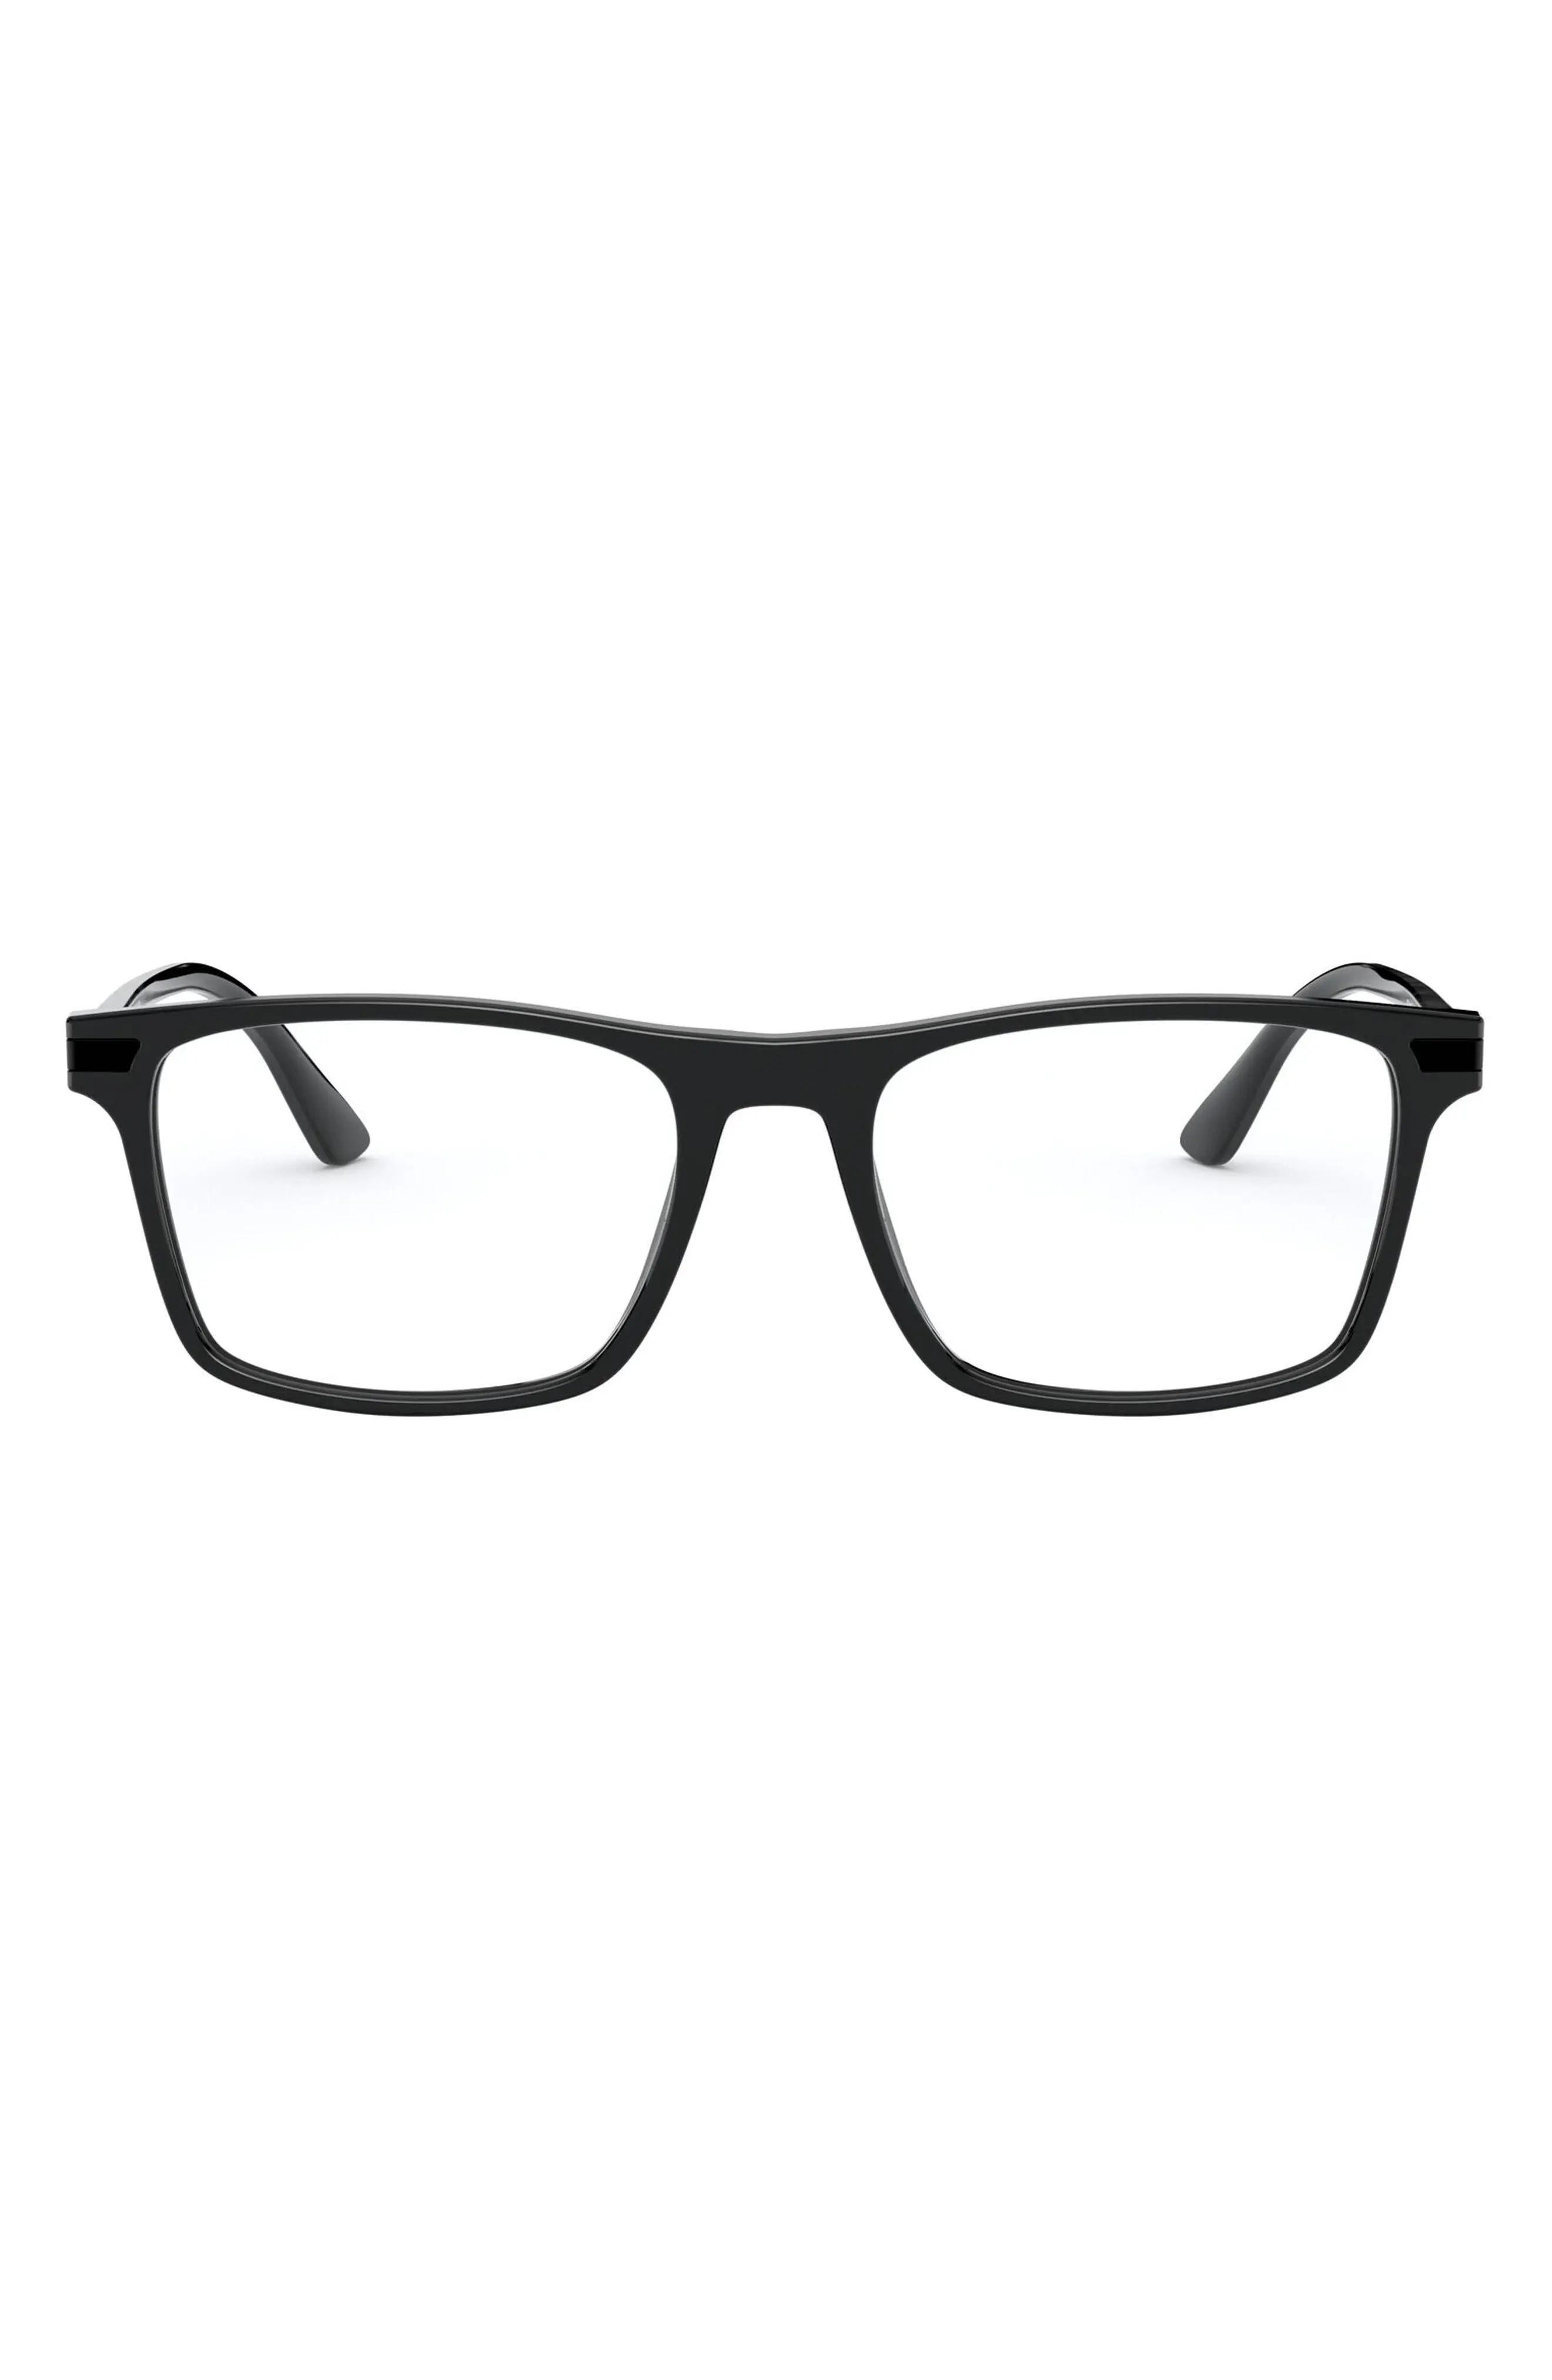 Prada 54mm Rectangular Optical Glasses in Black at Nordstrom | Nordstrom